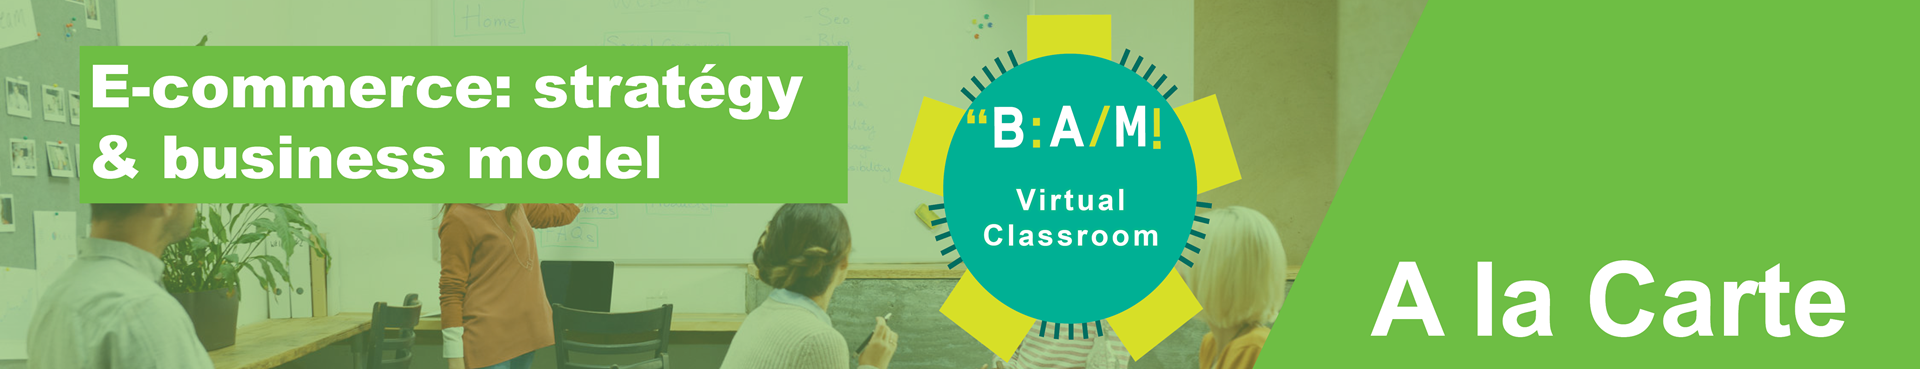 e-commerce_strategy-businessmodel 1300-250_virtual classroom